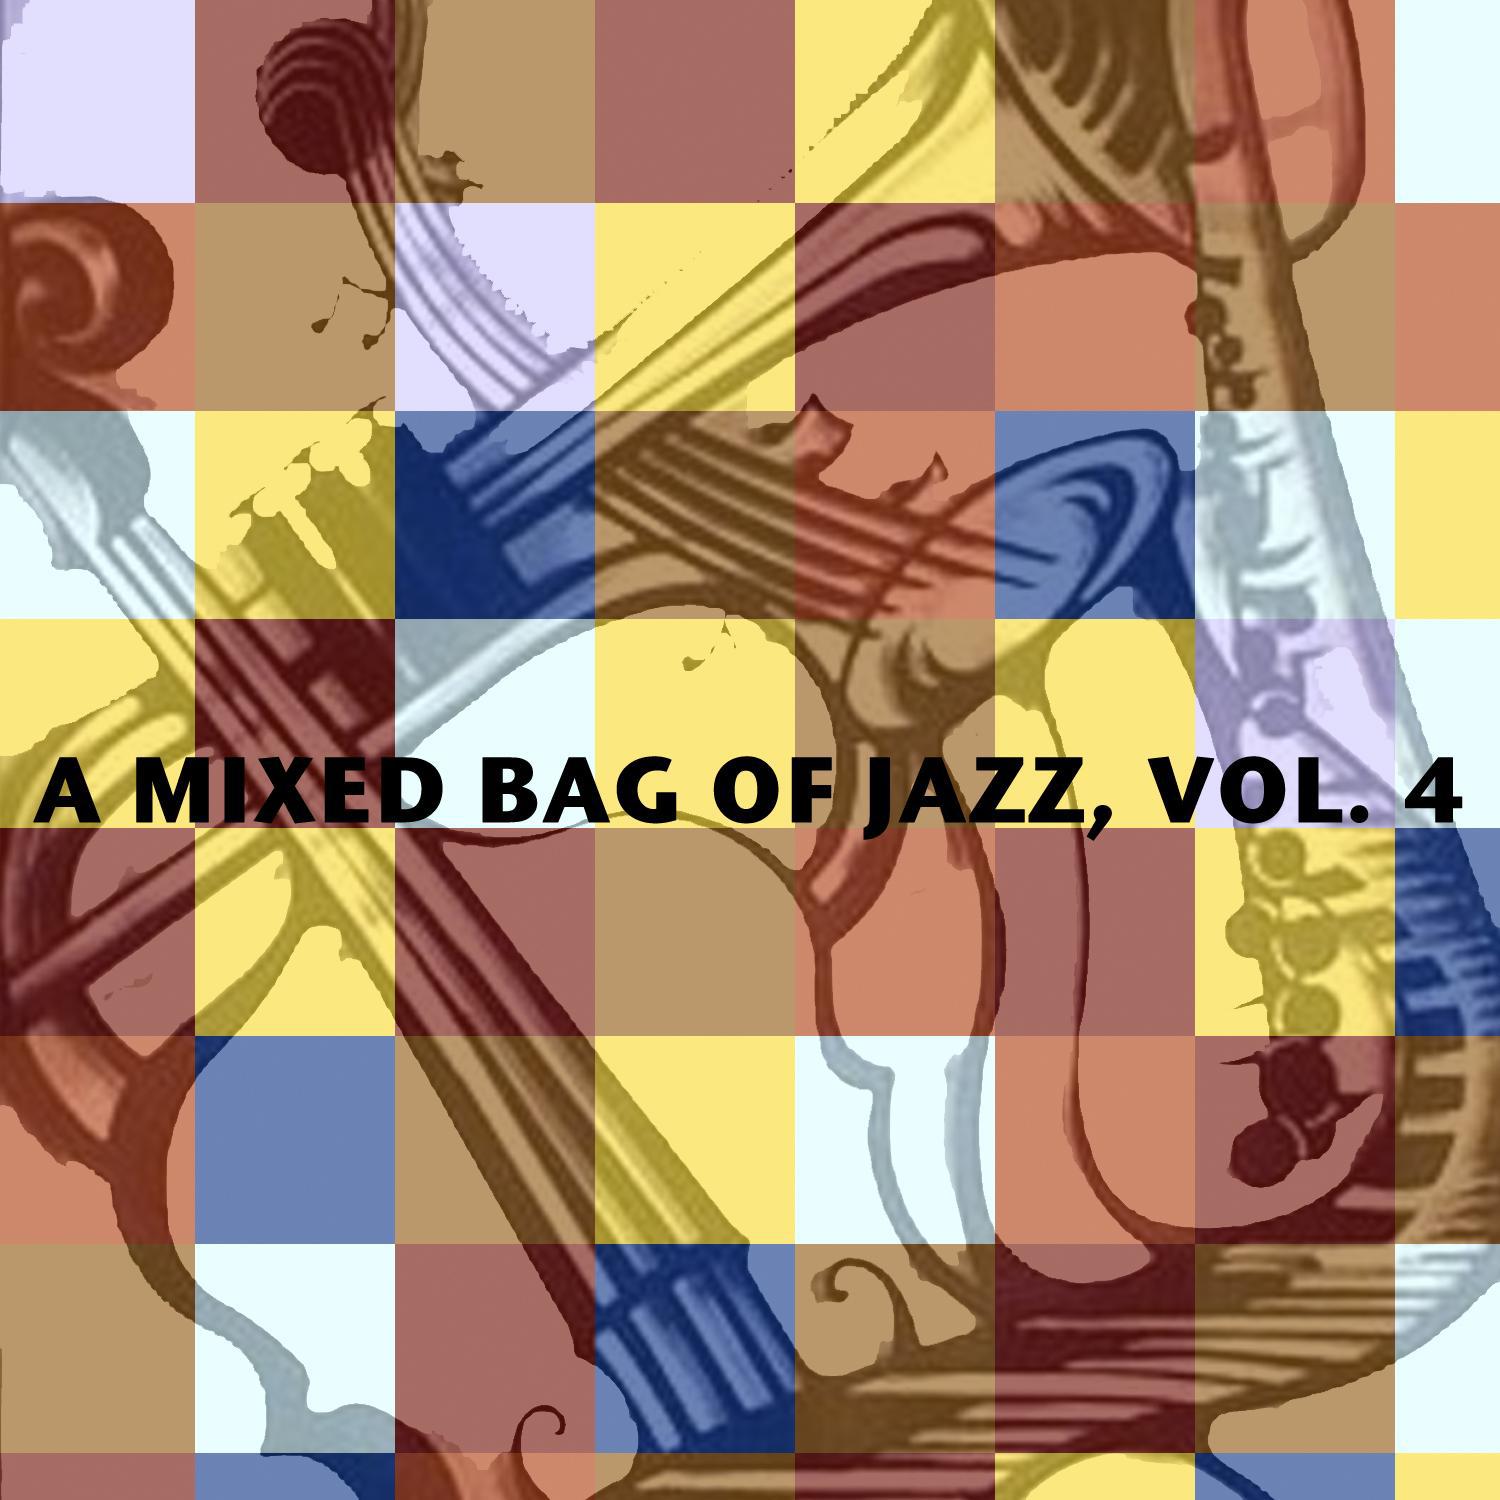 A Mixed Bag of Jazz, Vol. 4